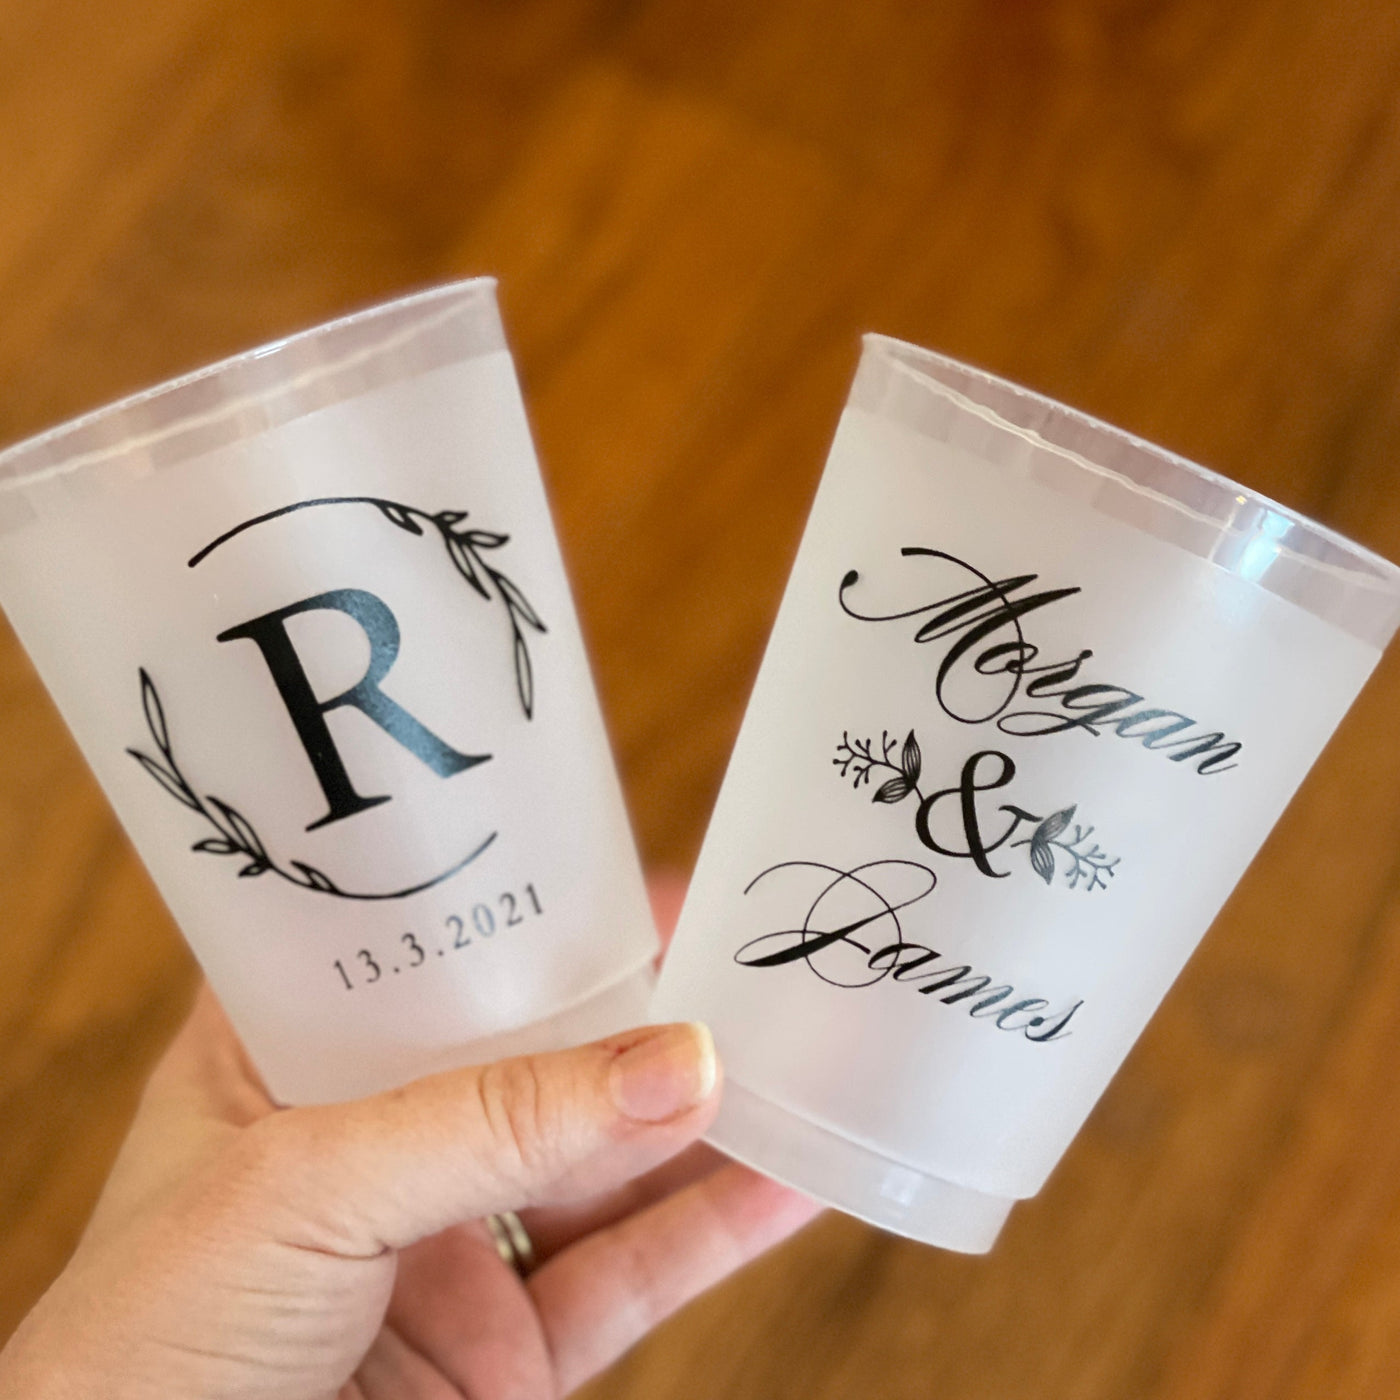 Frosted Plastic Wedding Cups  Rubi and Lib – Rubi and Lib Design Studio